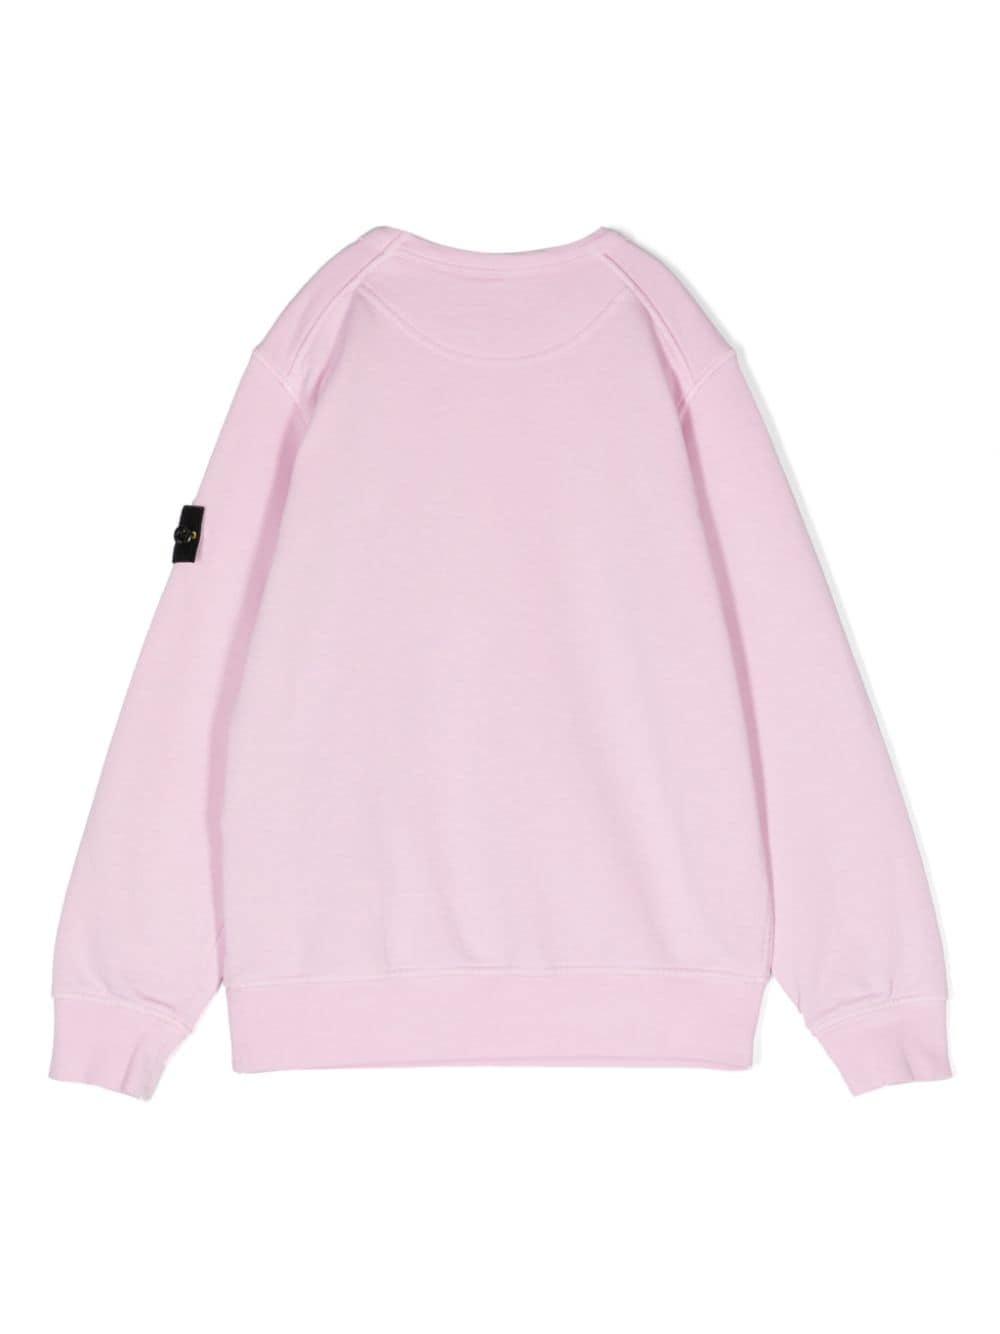 Pink sweatshirt for boys with logo